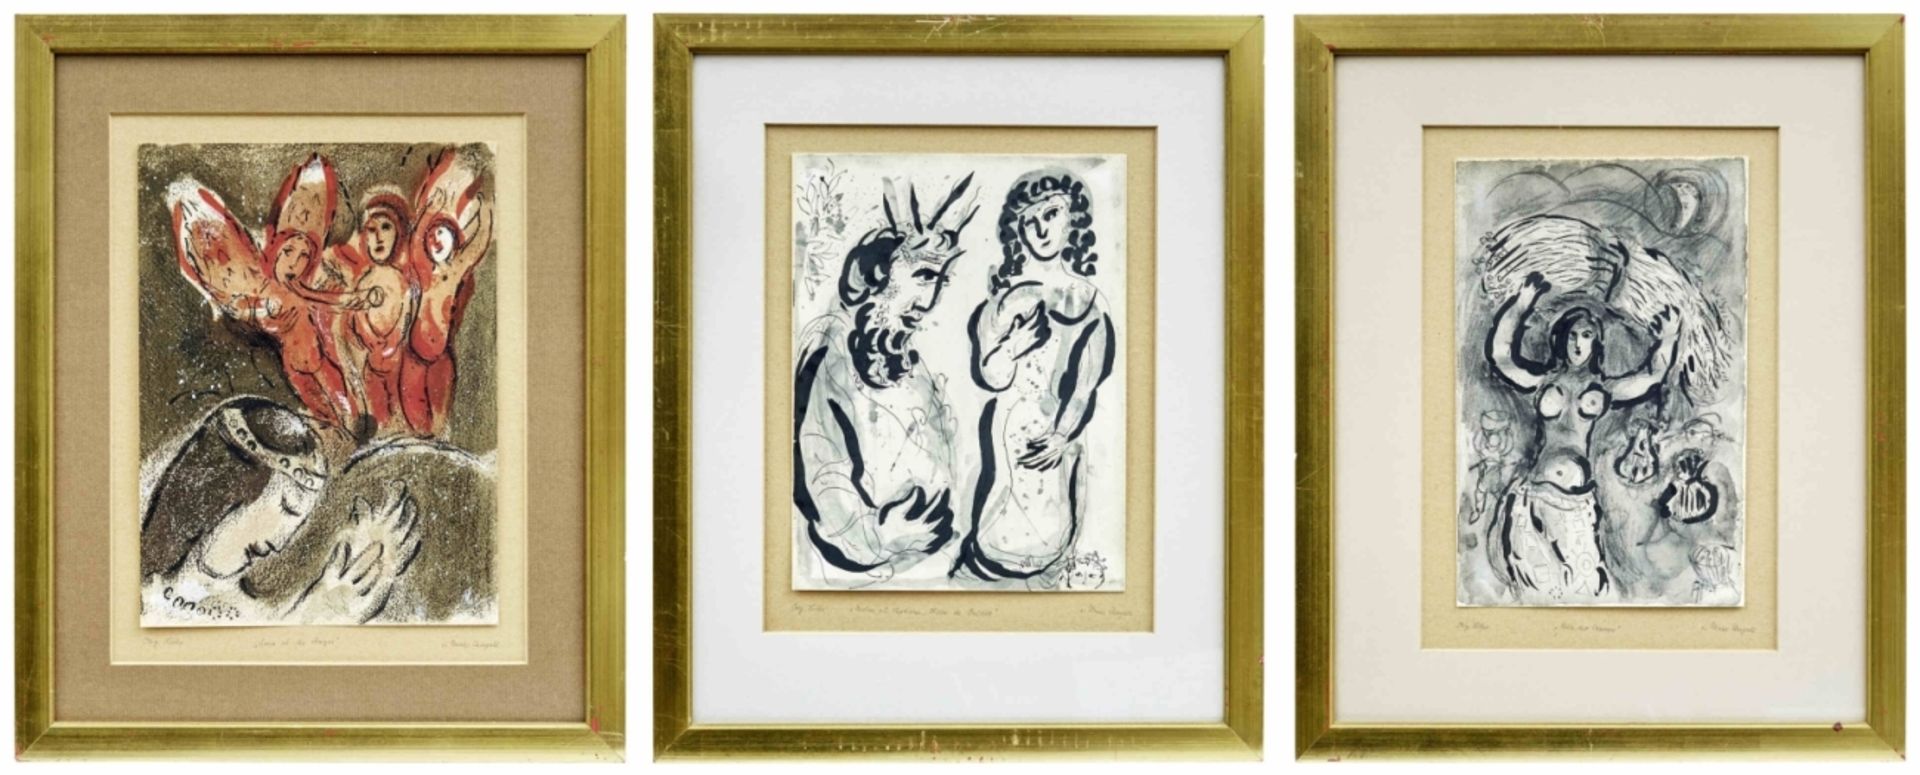 Chagall, Marc: "Sara et les Anges" (Sarah und die Engel)